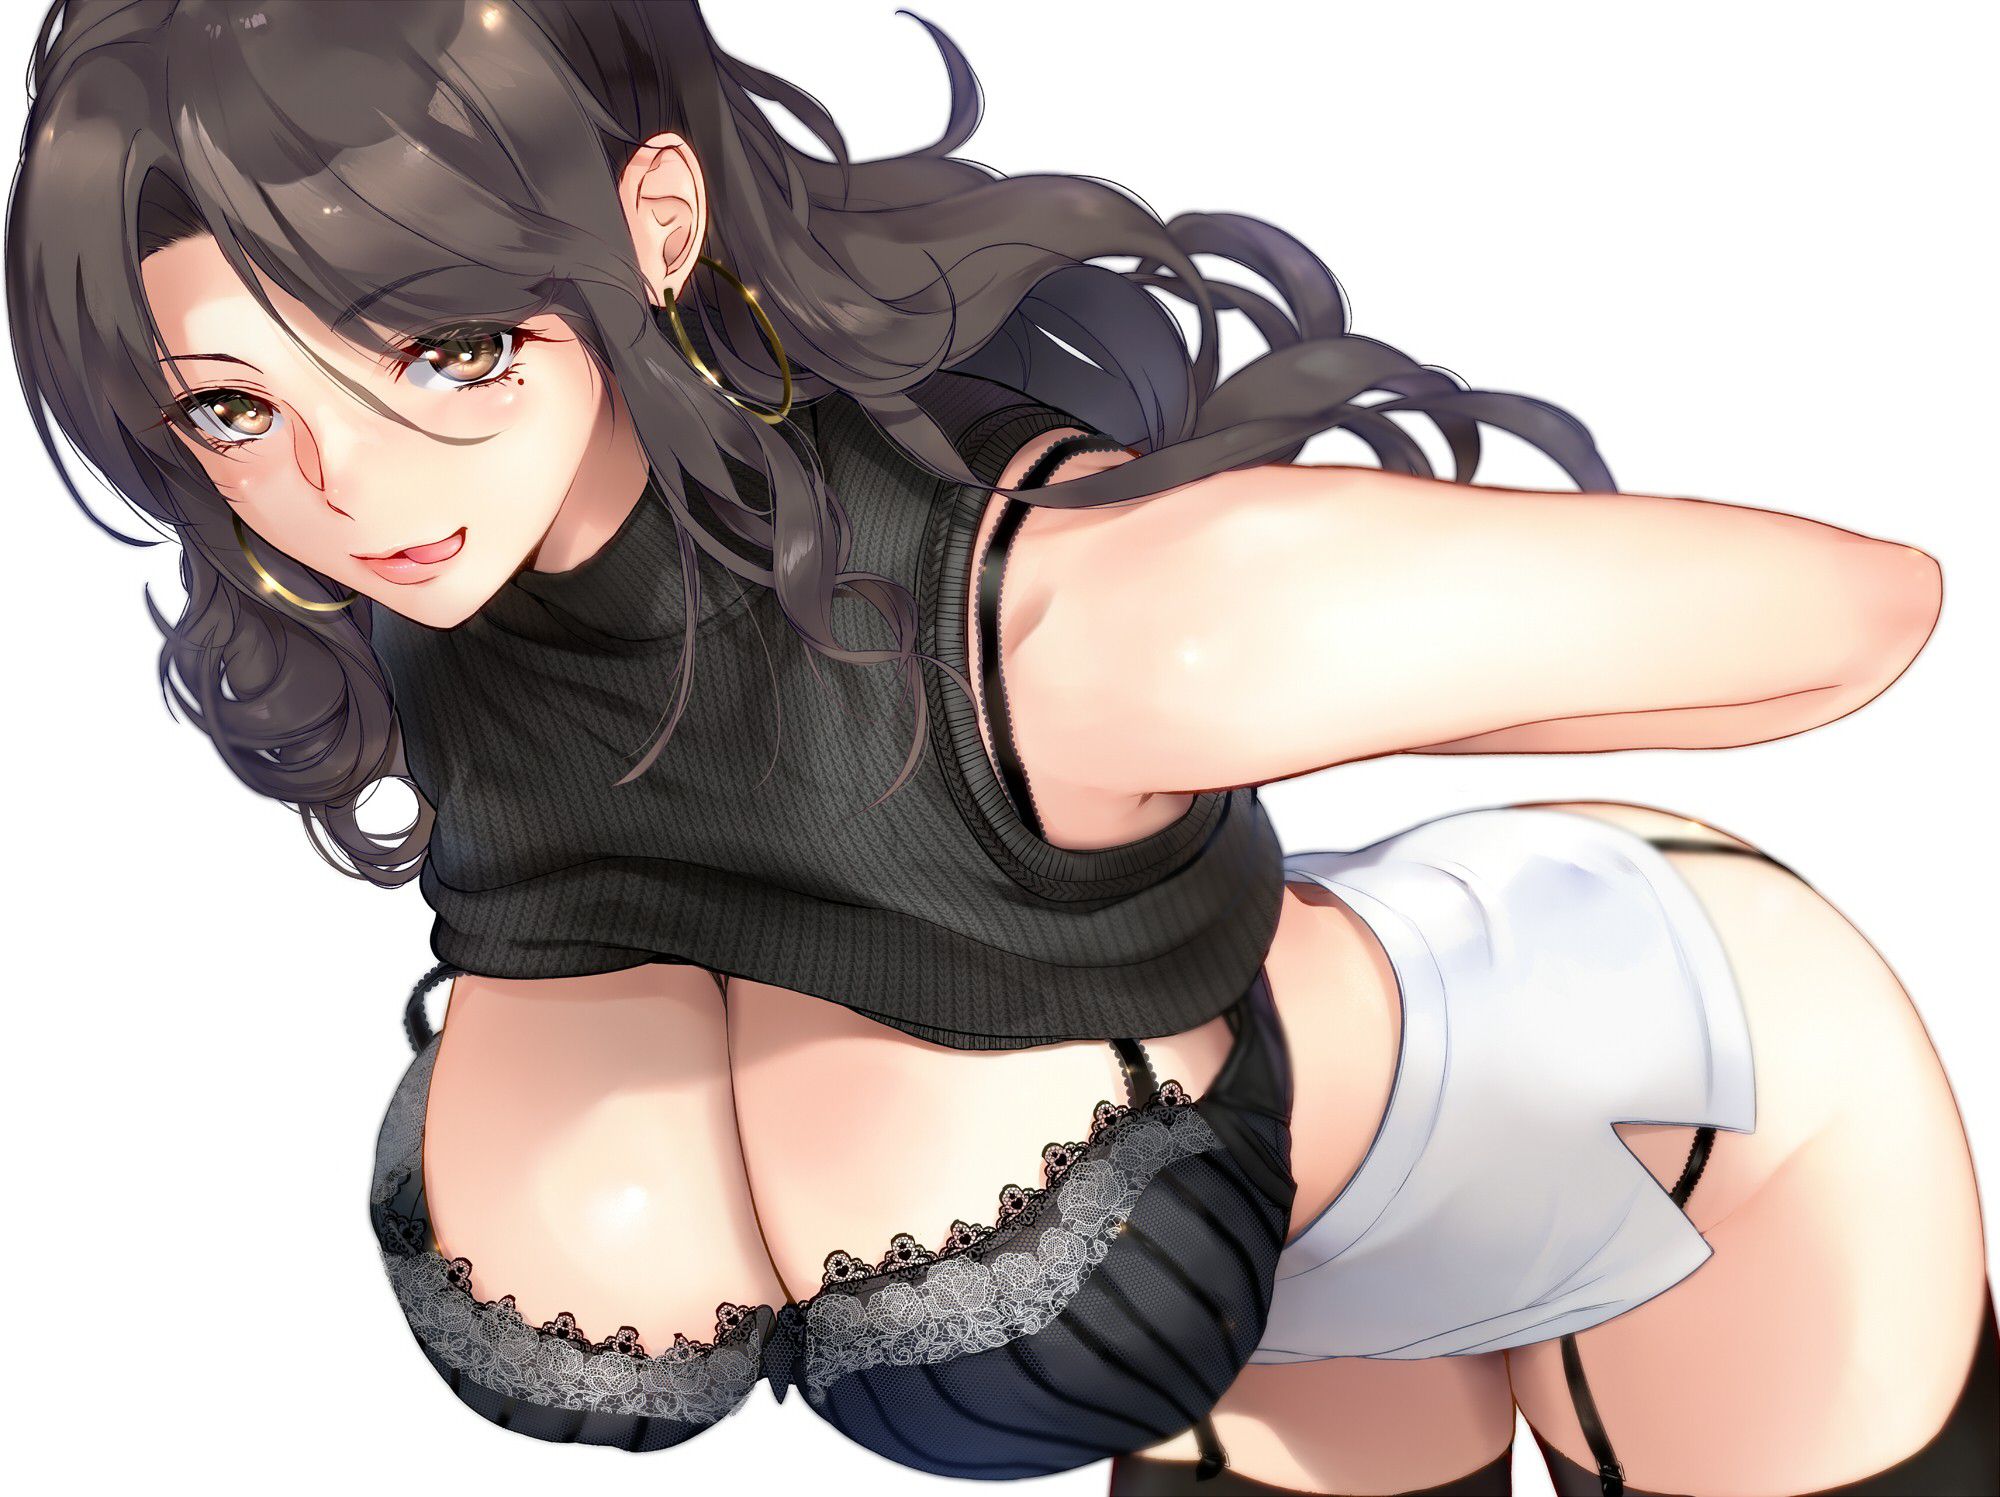 【2nd】Erotic image of a girl wearing a garter belt Part 40 28